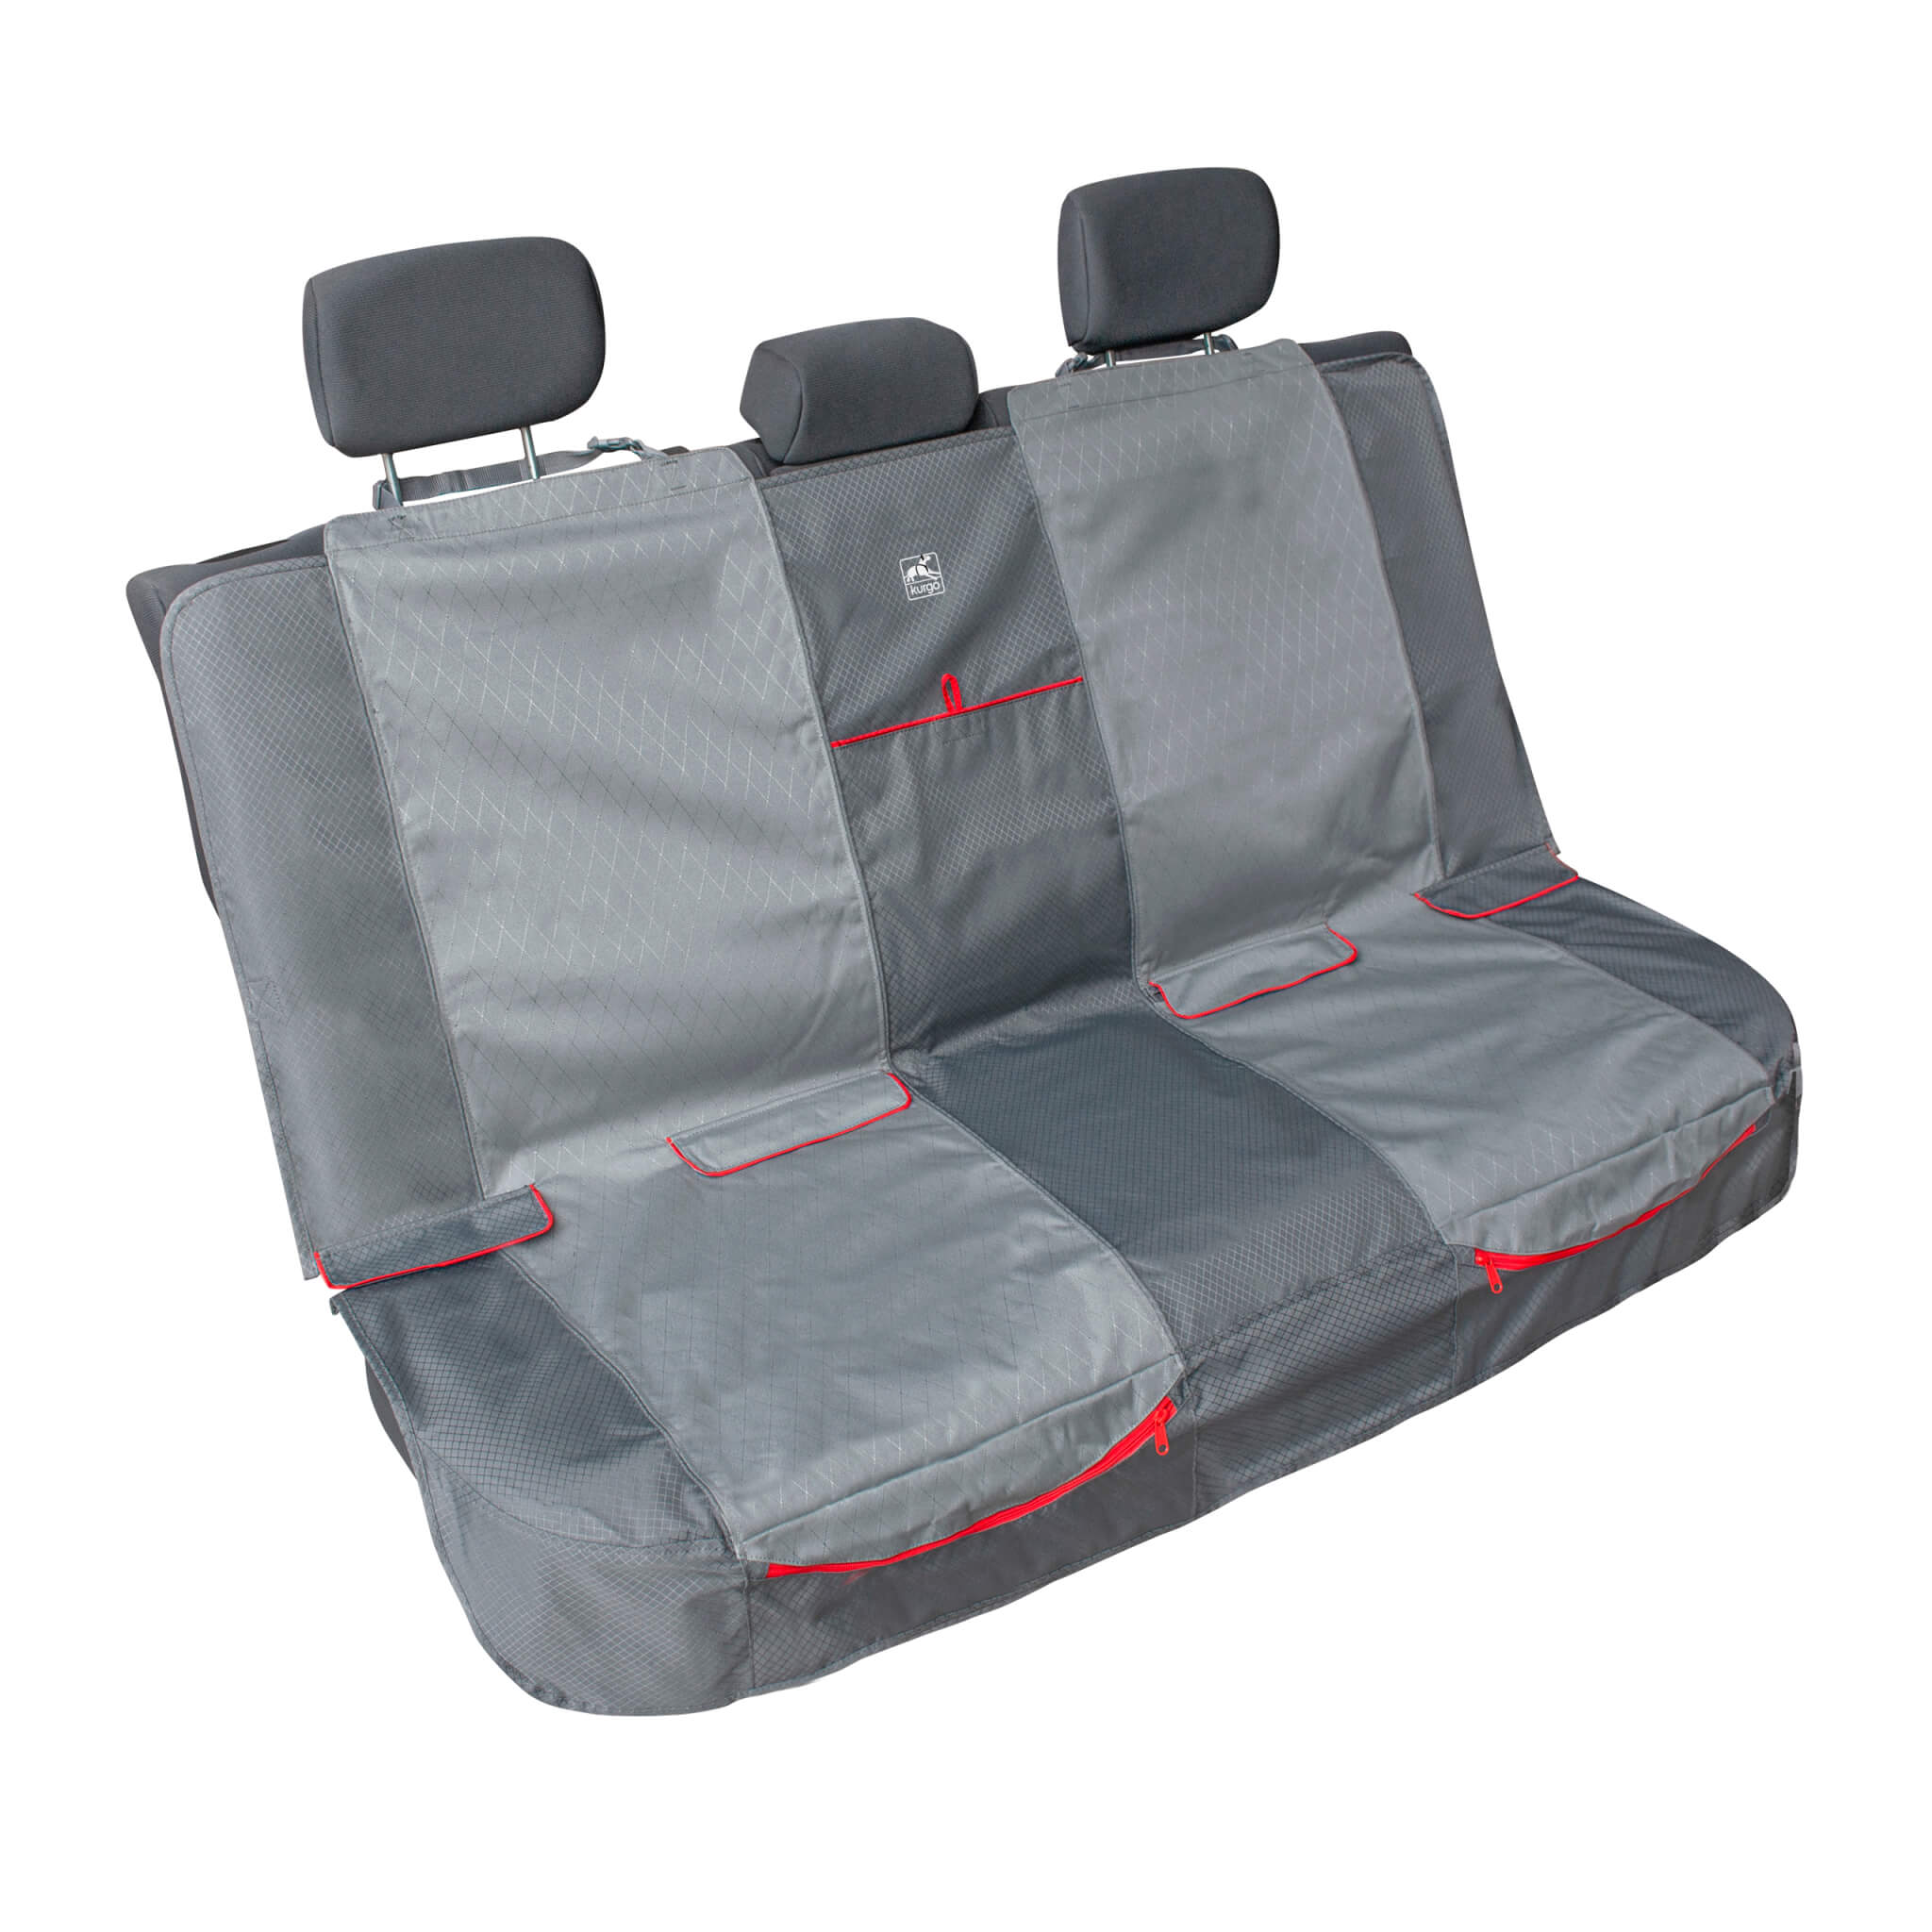 Kurgo journey bench seat cover - grey